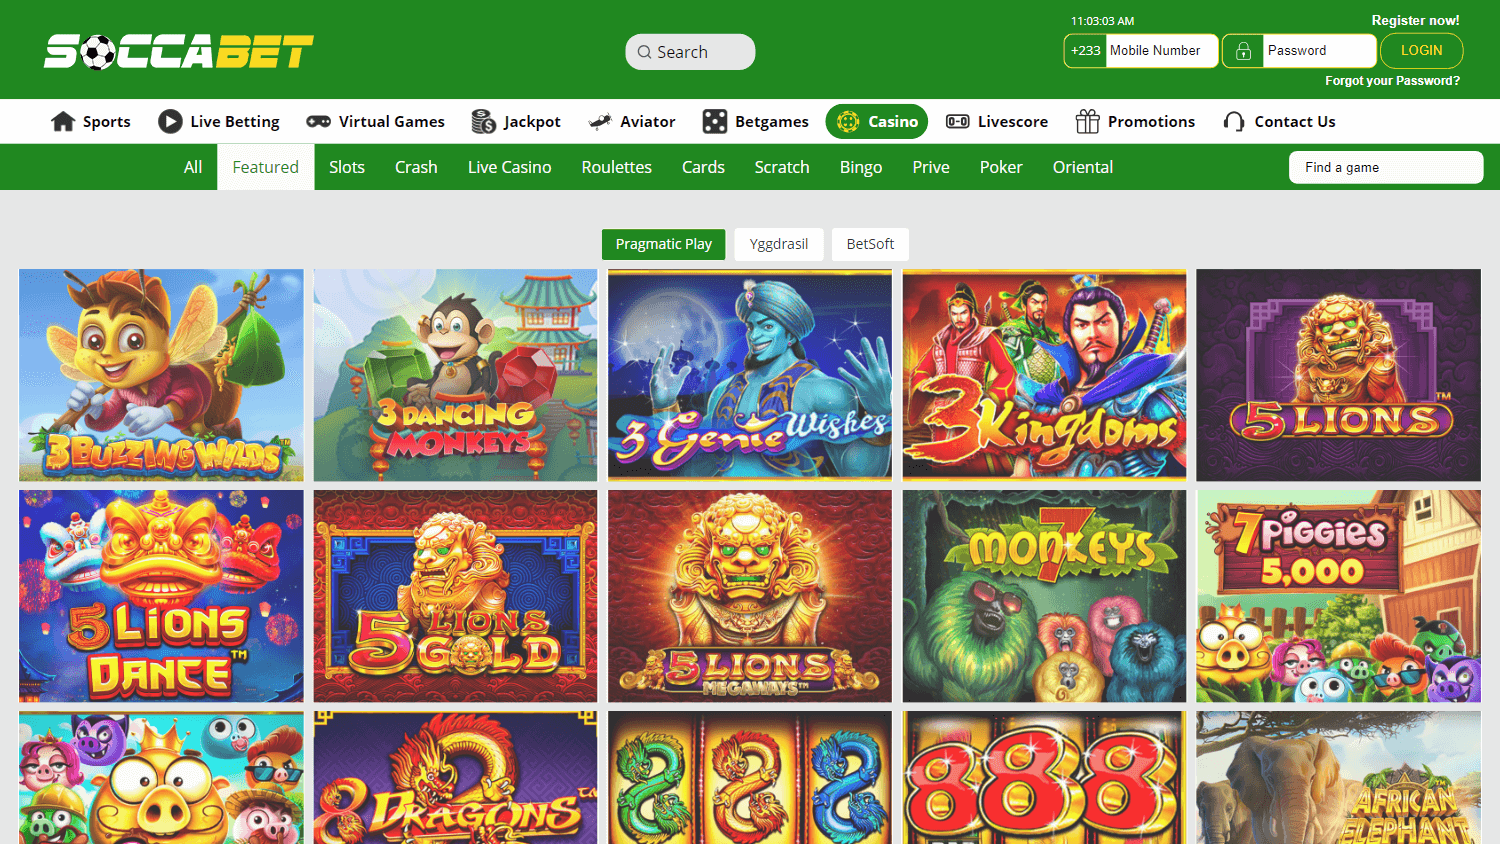 soccabet_casino_game_gallery_desktop